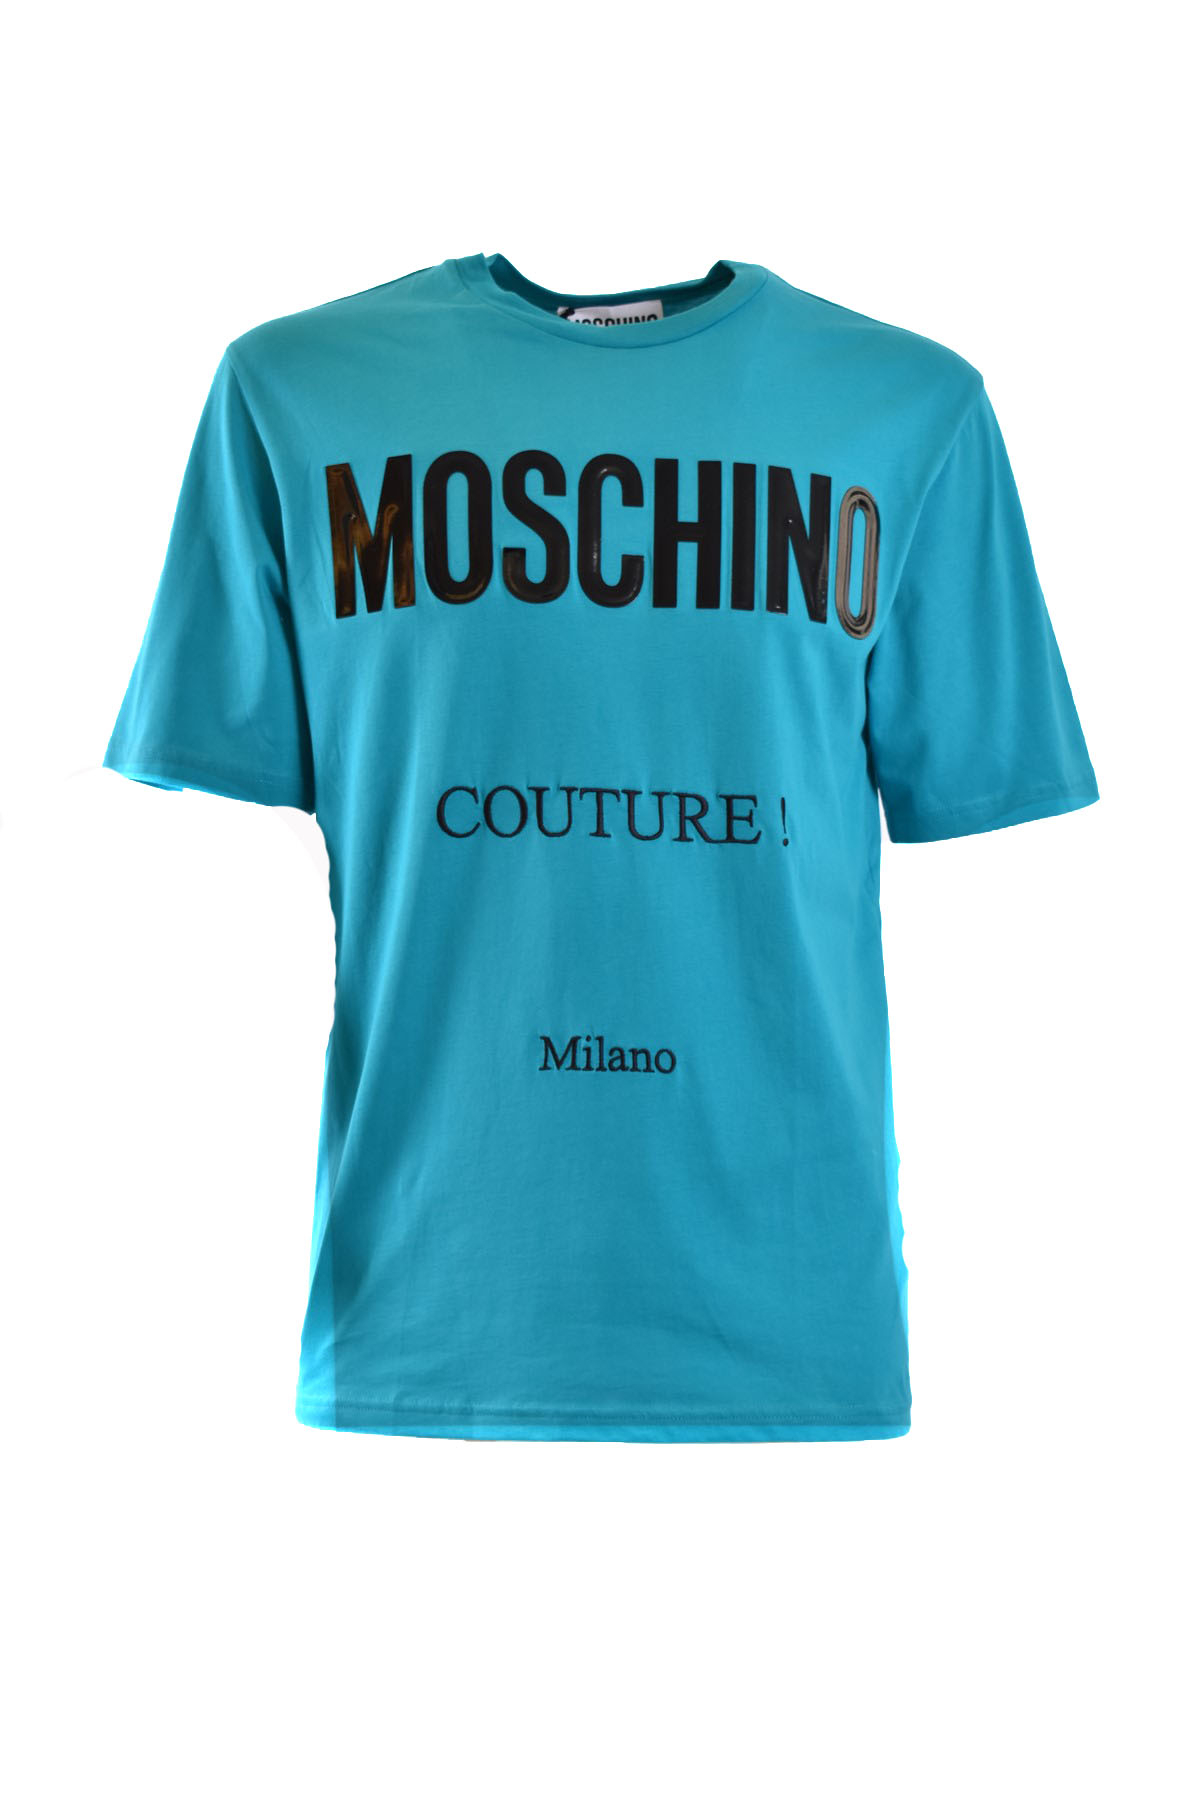 T-Shirt Moschino ECM178 - Outlet Bicocca